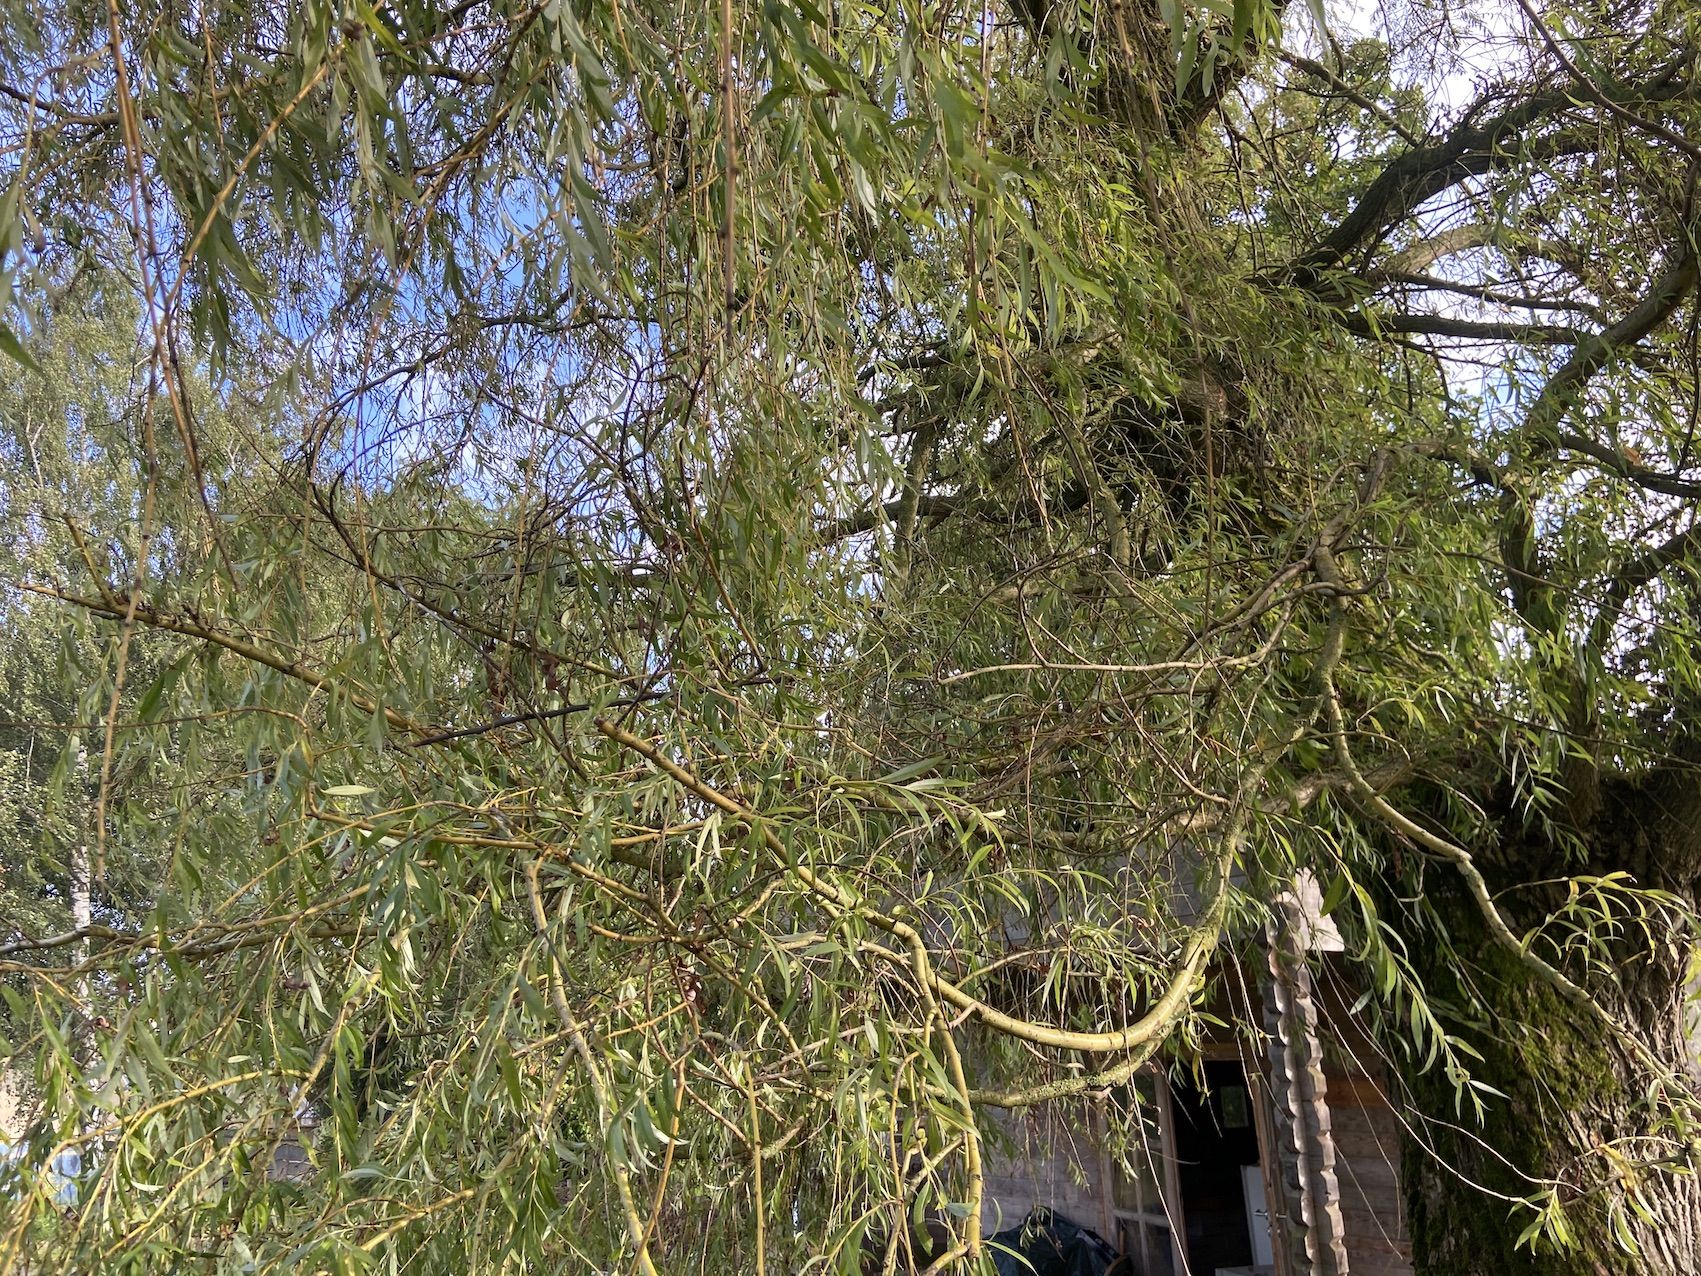 Salix Alba-saule pleureur